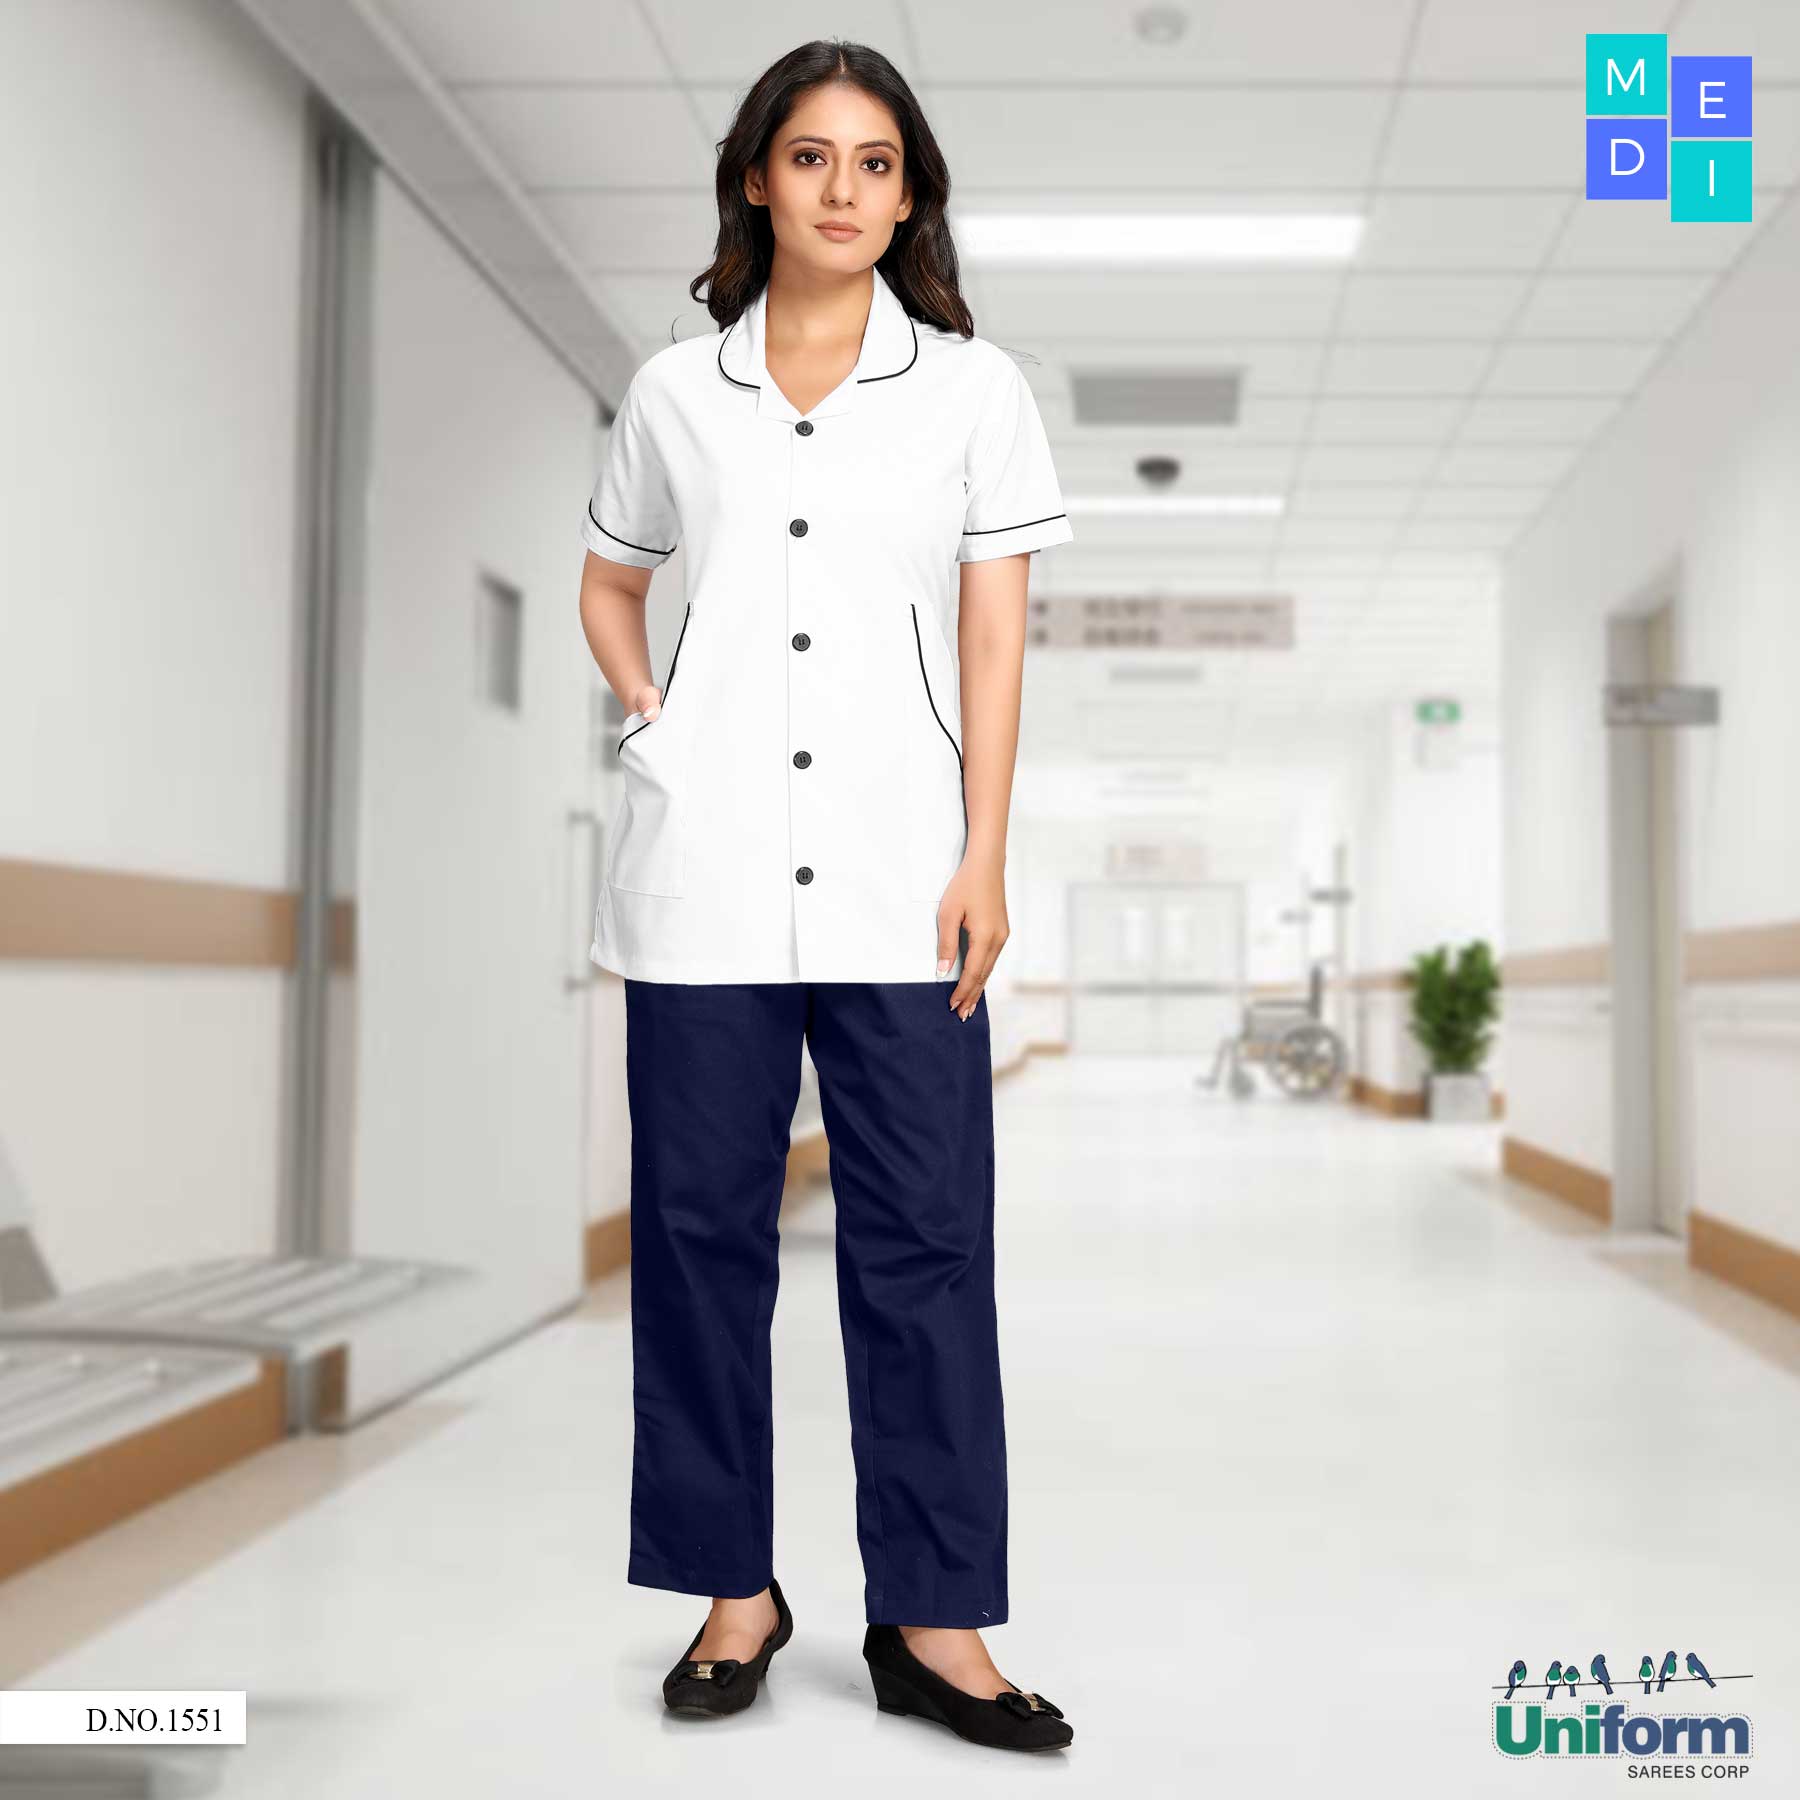 Nurse Uniforms Uniform Sarees Corp India's Most Trusted Brand For Uniforms